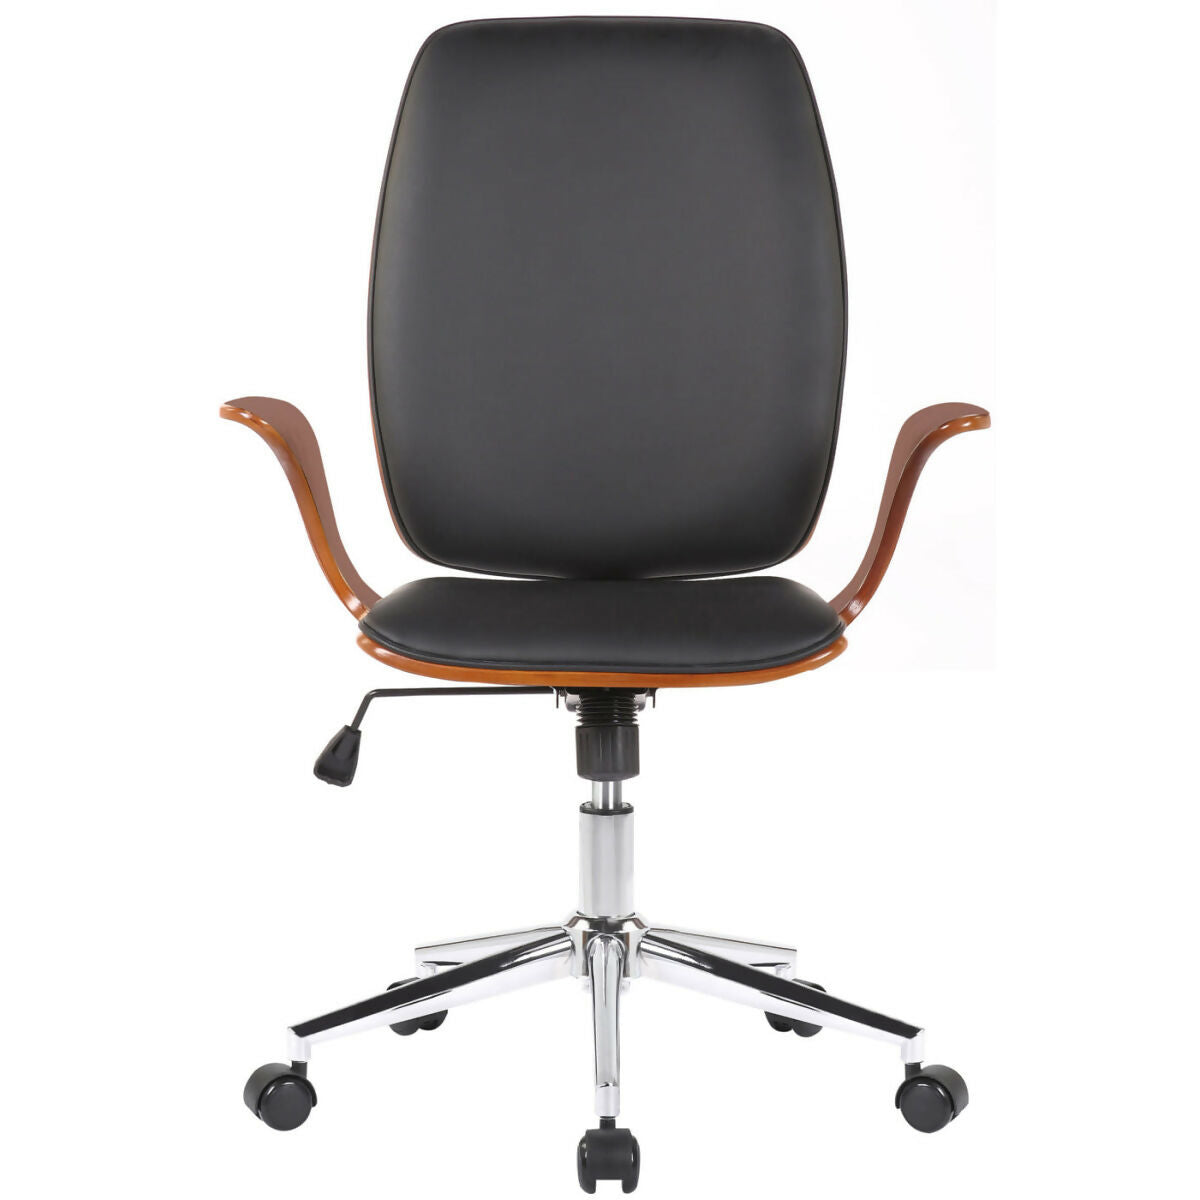 Burbank office chair - Walnut - Black